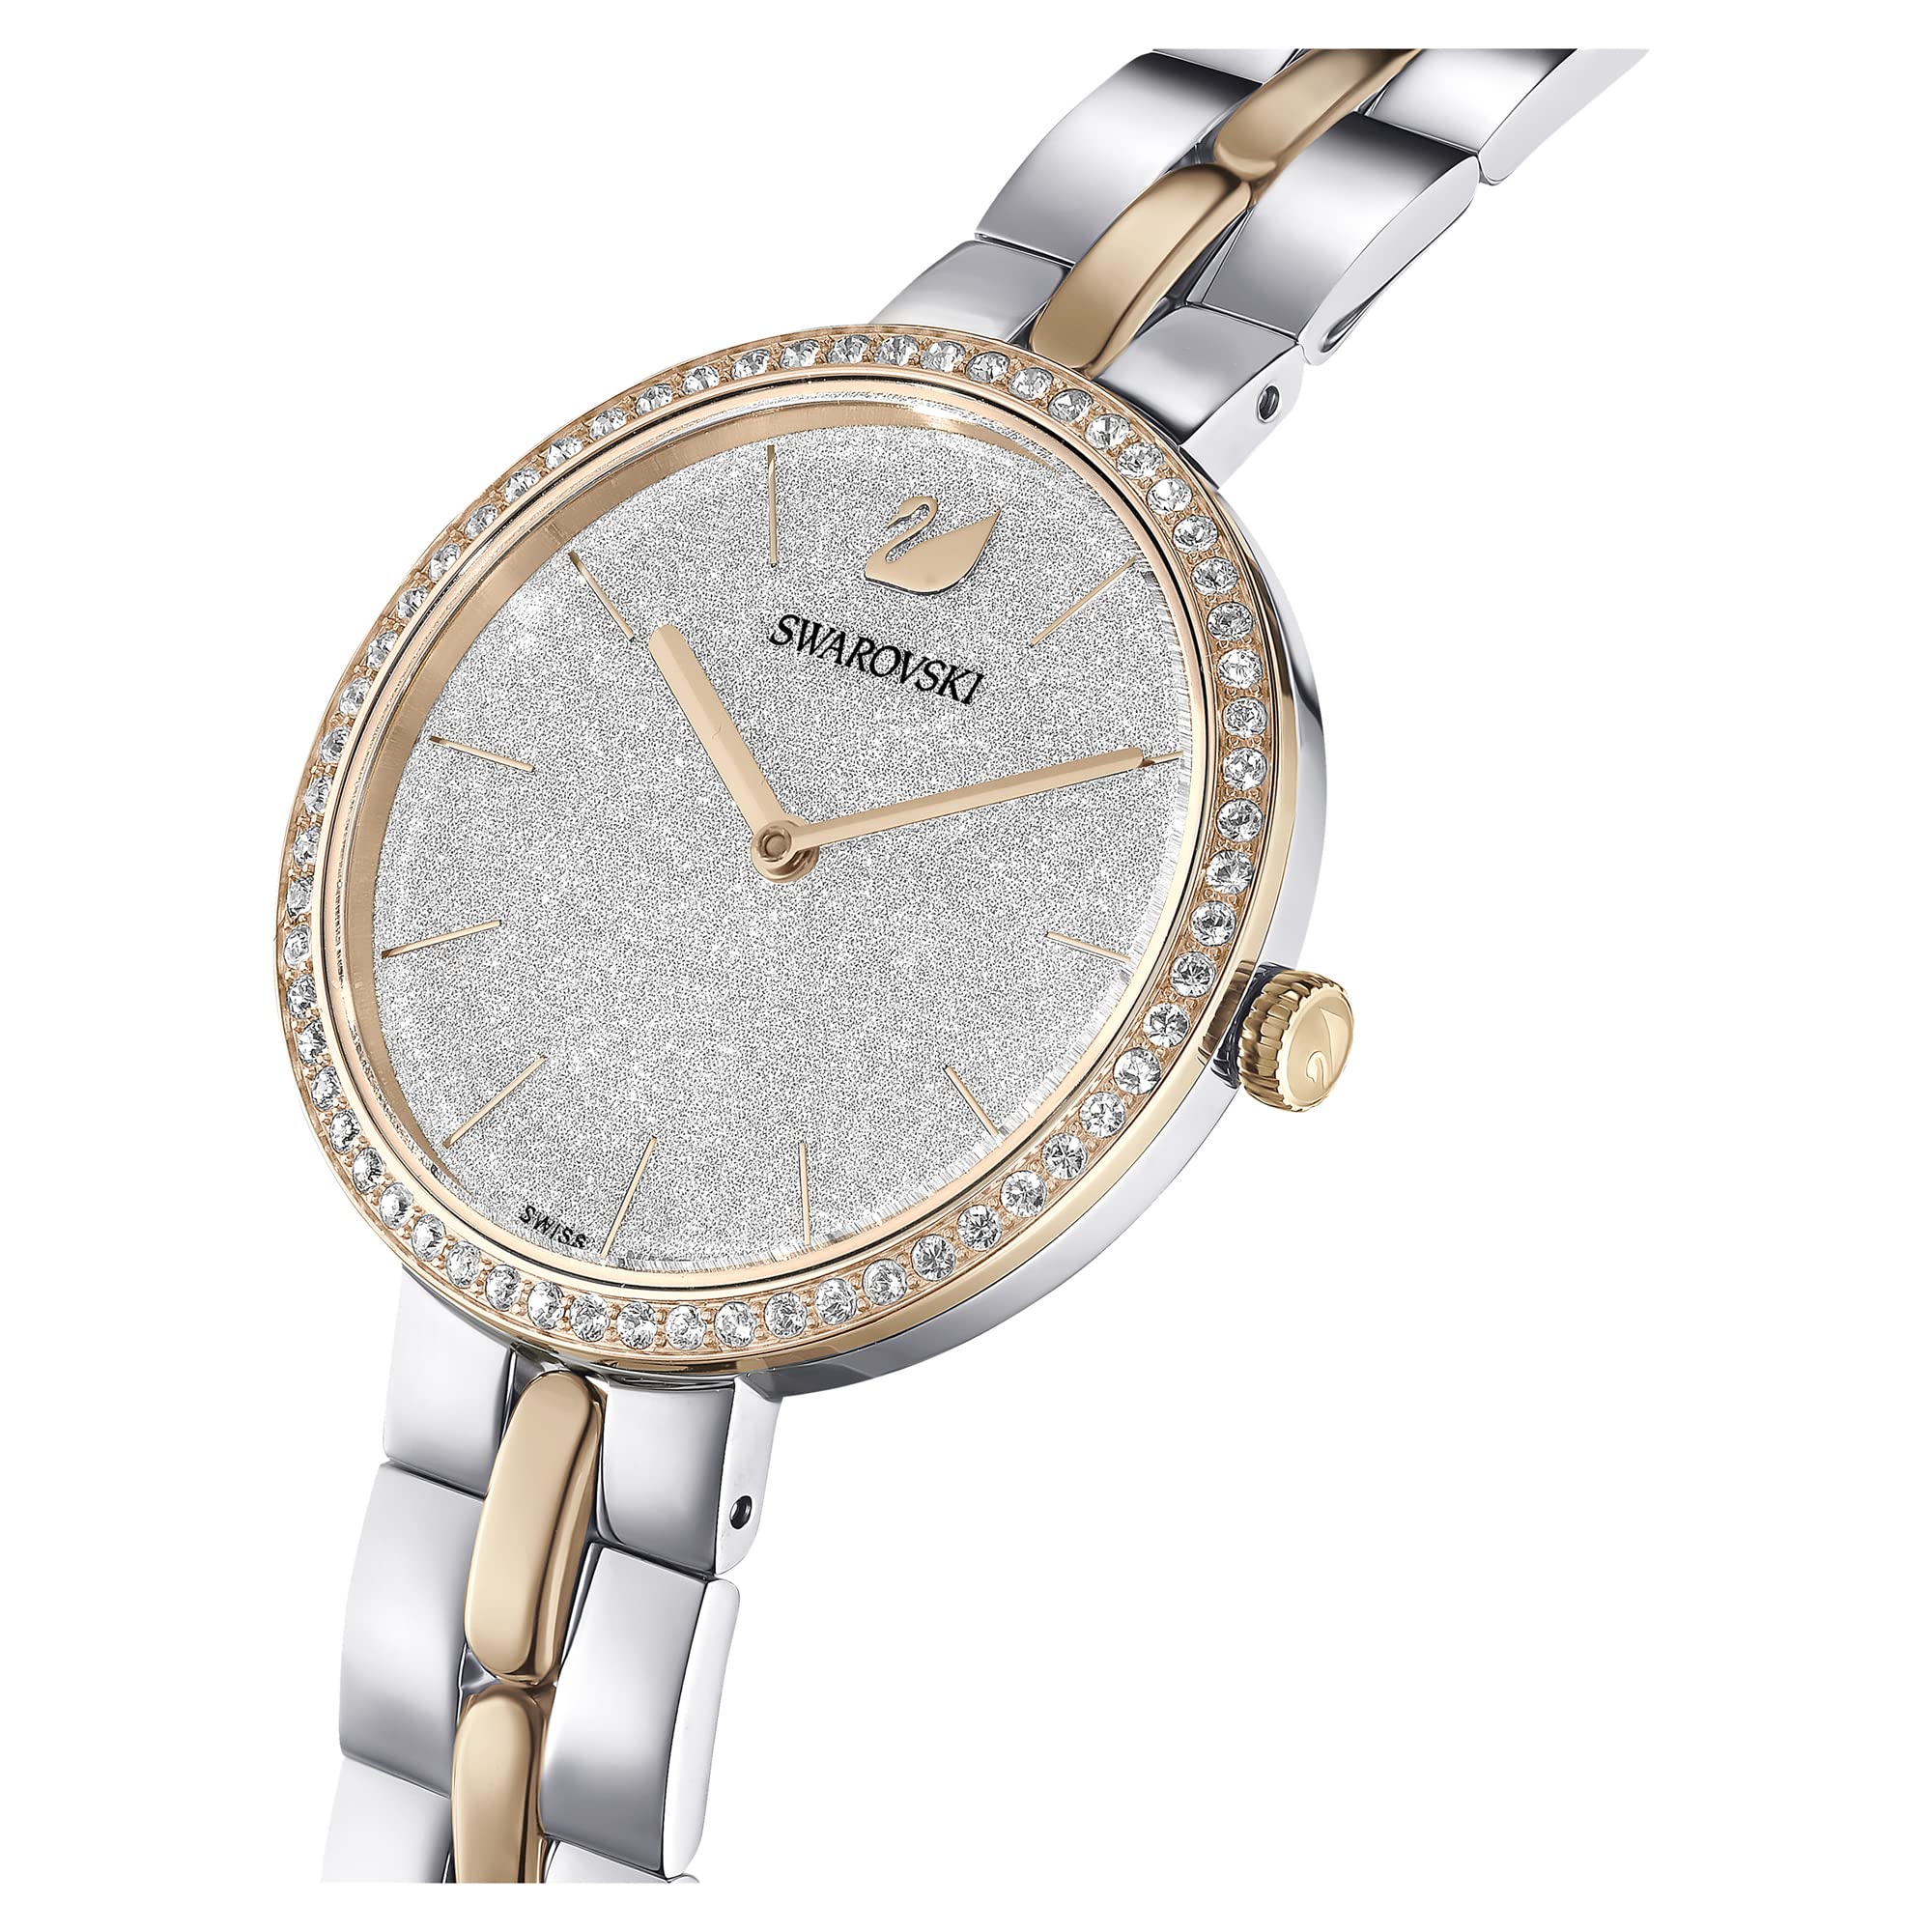 SWAROVSKI Women's Cosmopolitan Crystal Watch Collection